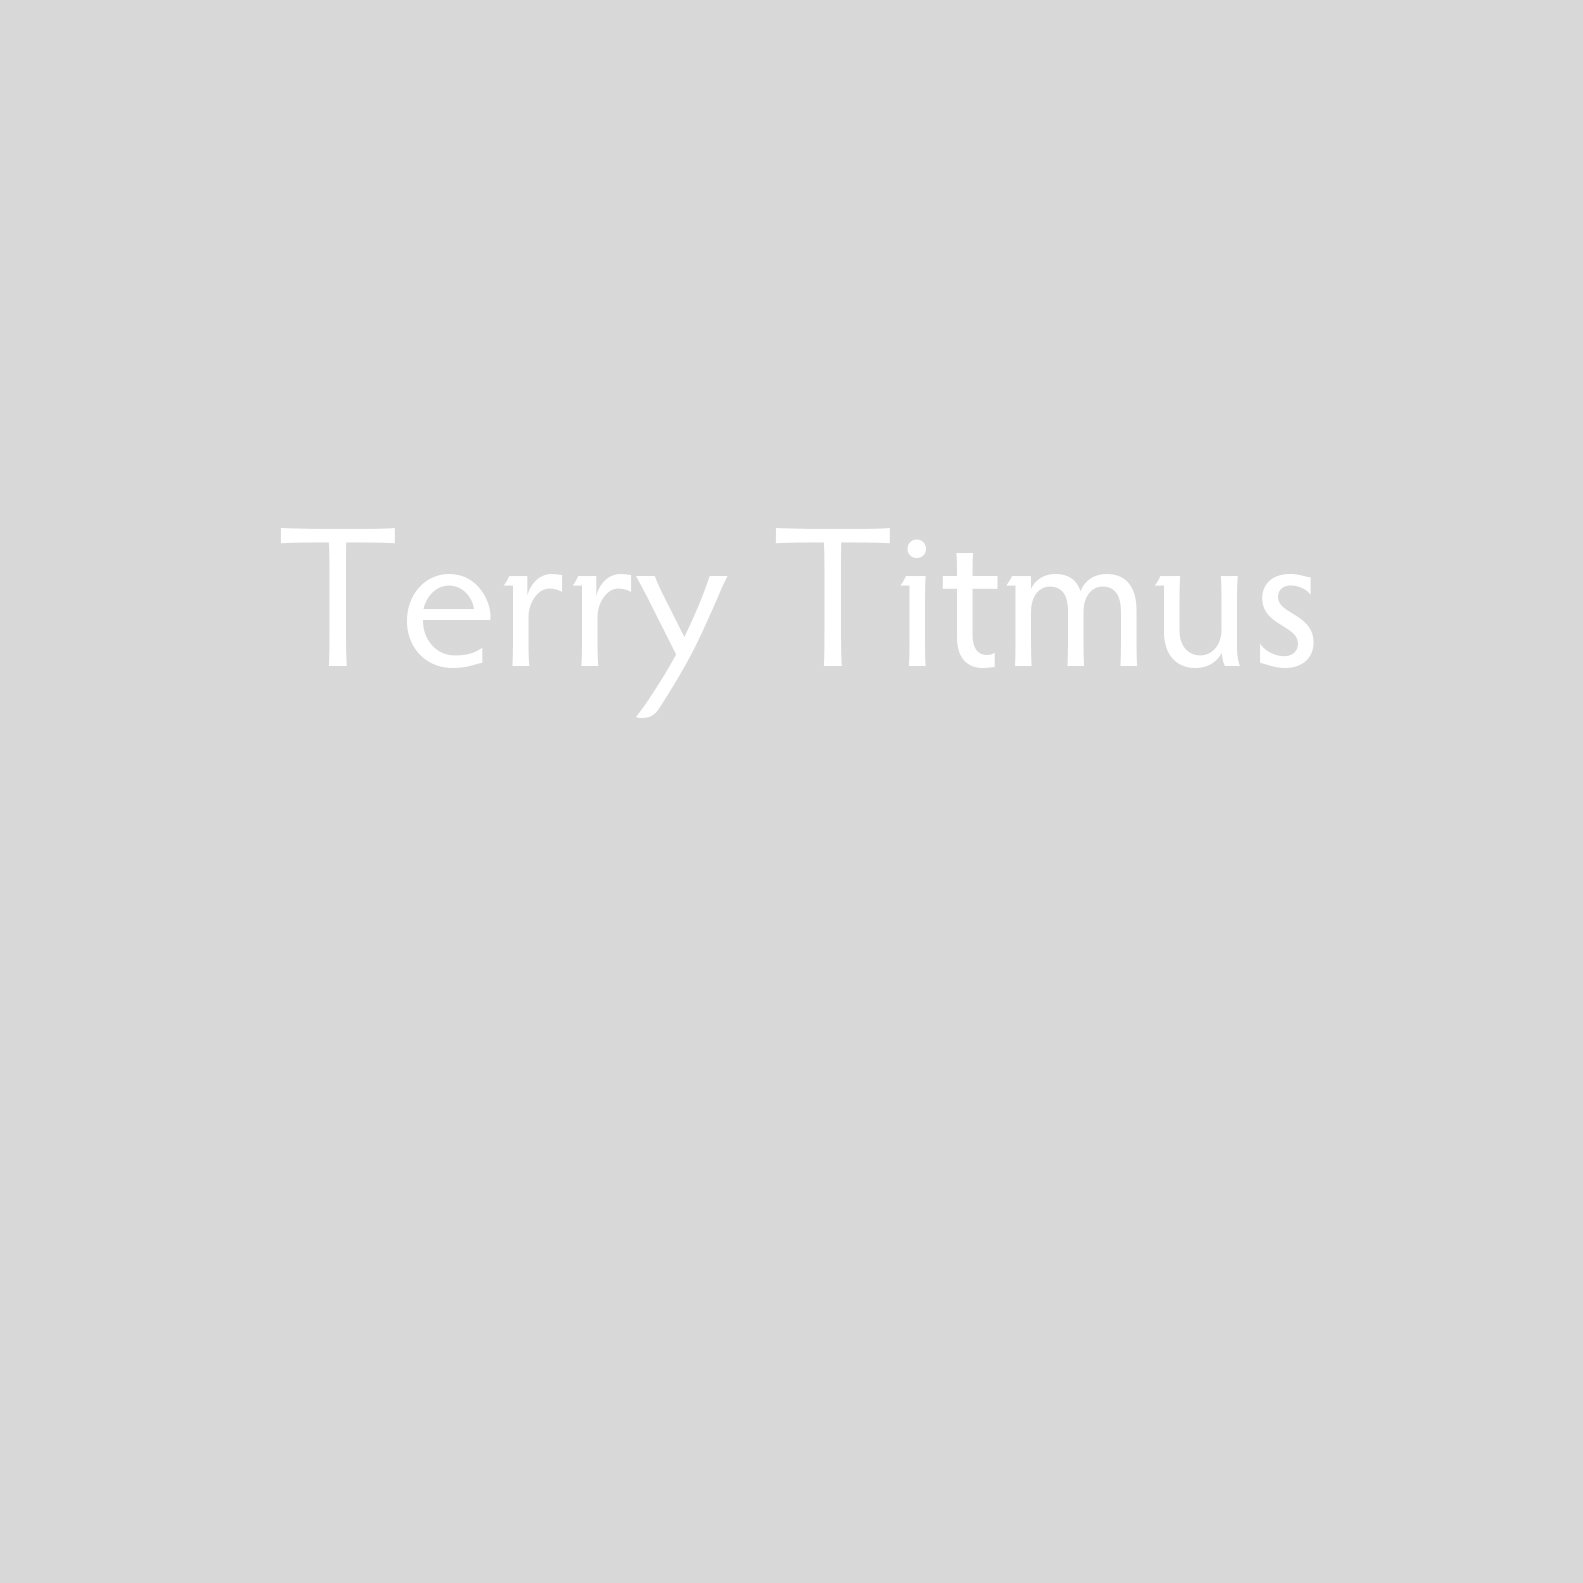 Terry Titmus